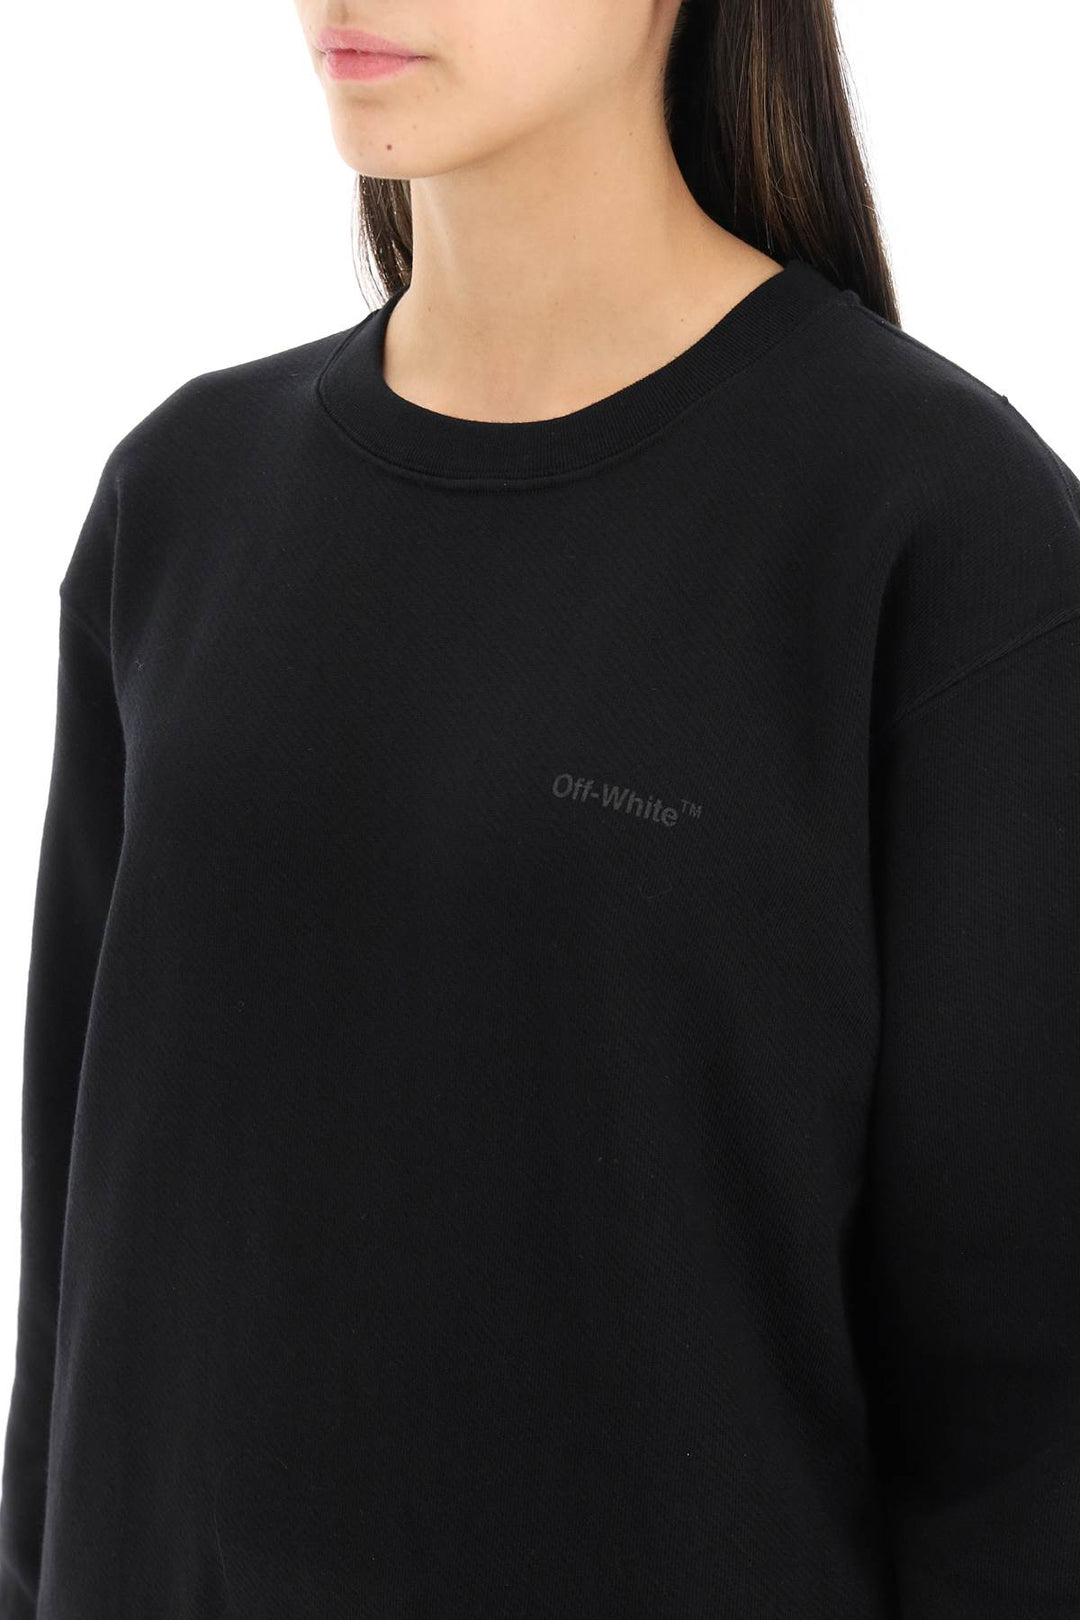 Off White 'Diag' Print Crewneck Sweatshirt   Black